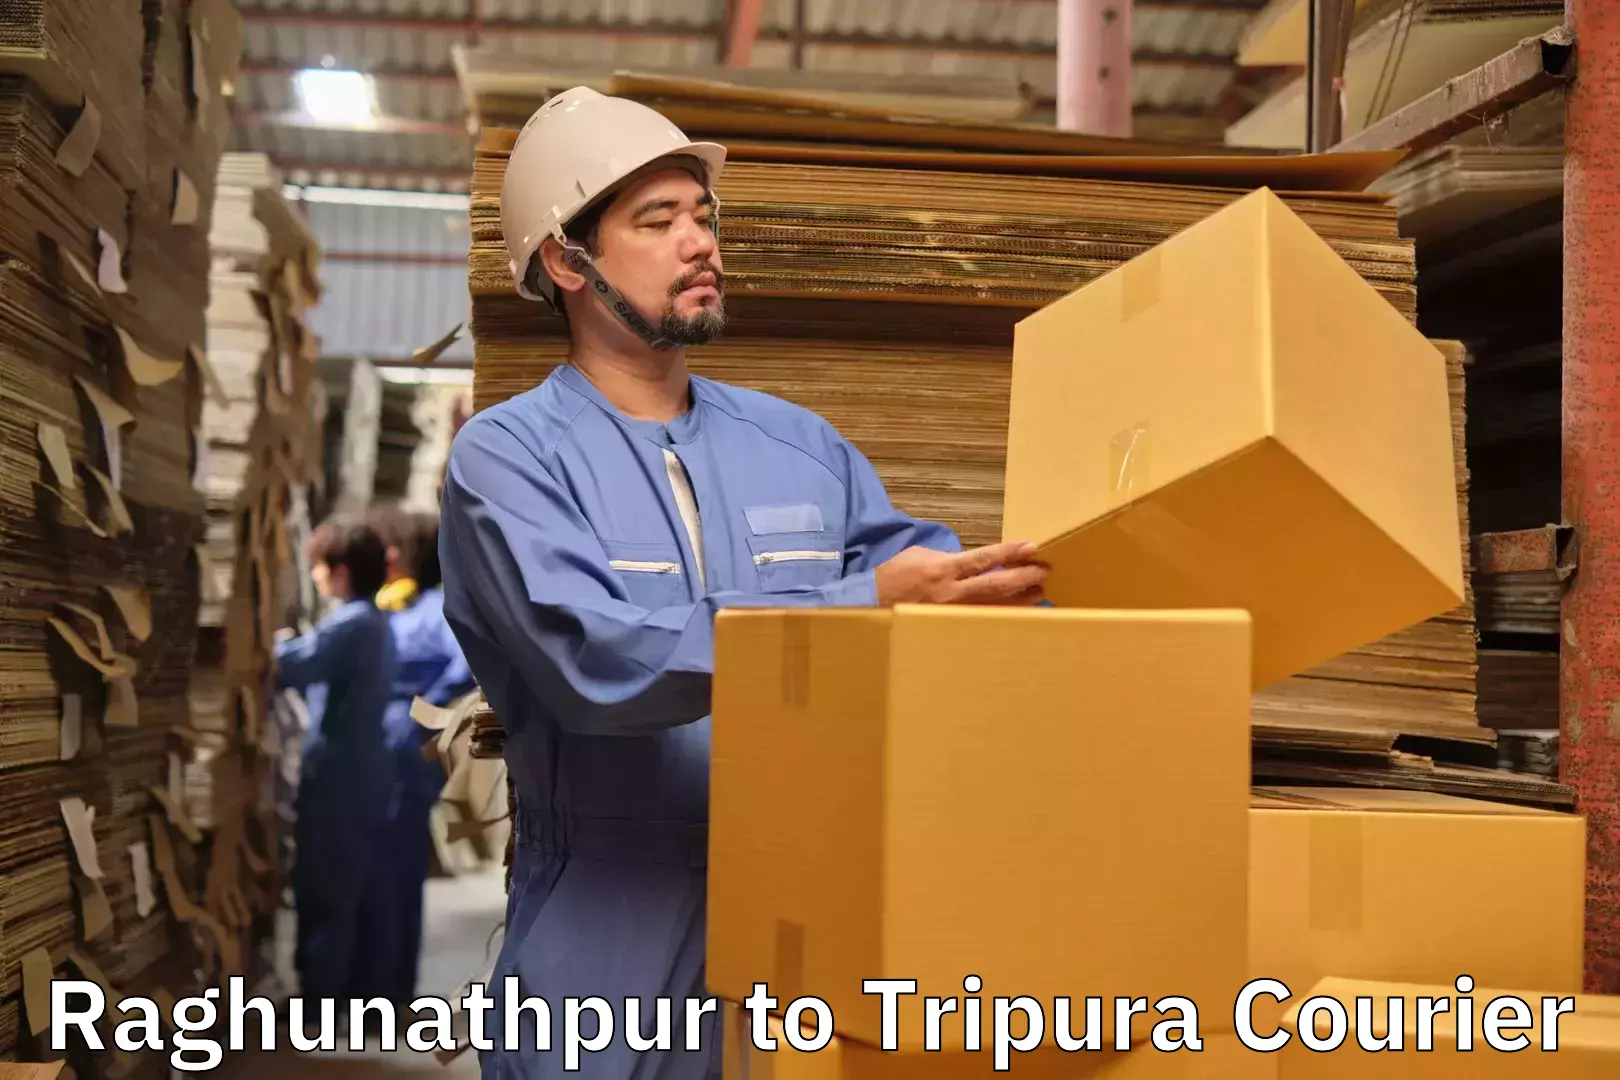 Luggage delivery app Raghunathpur to Udaipur Tripura